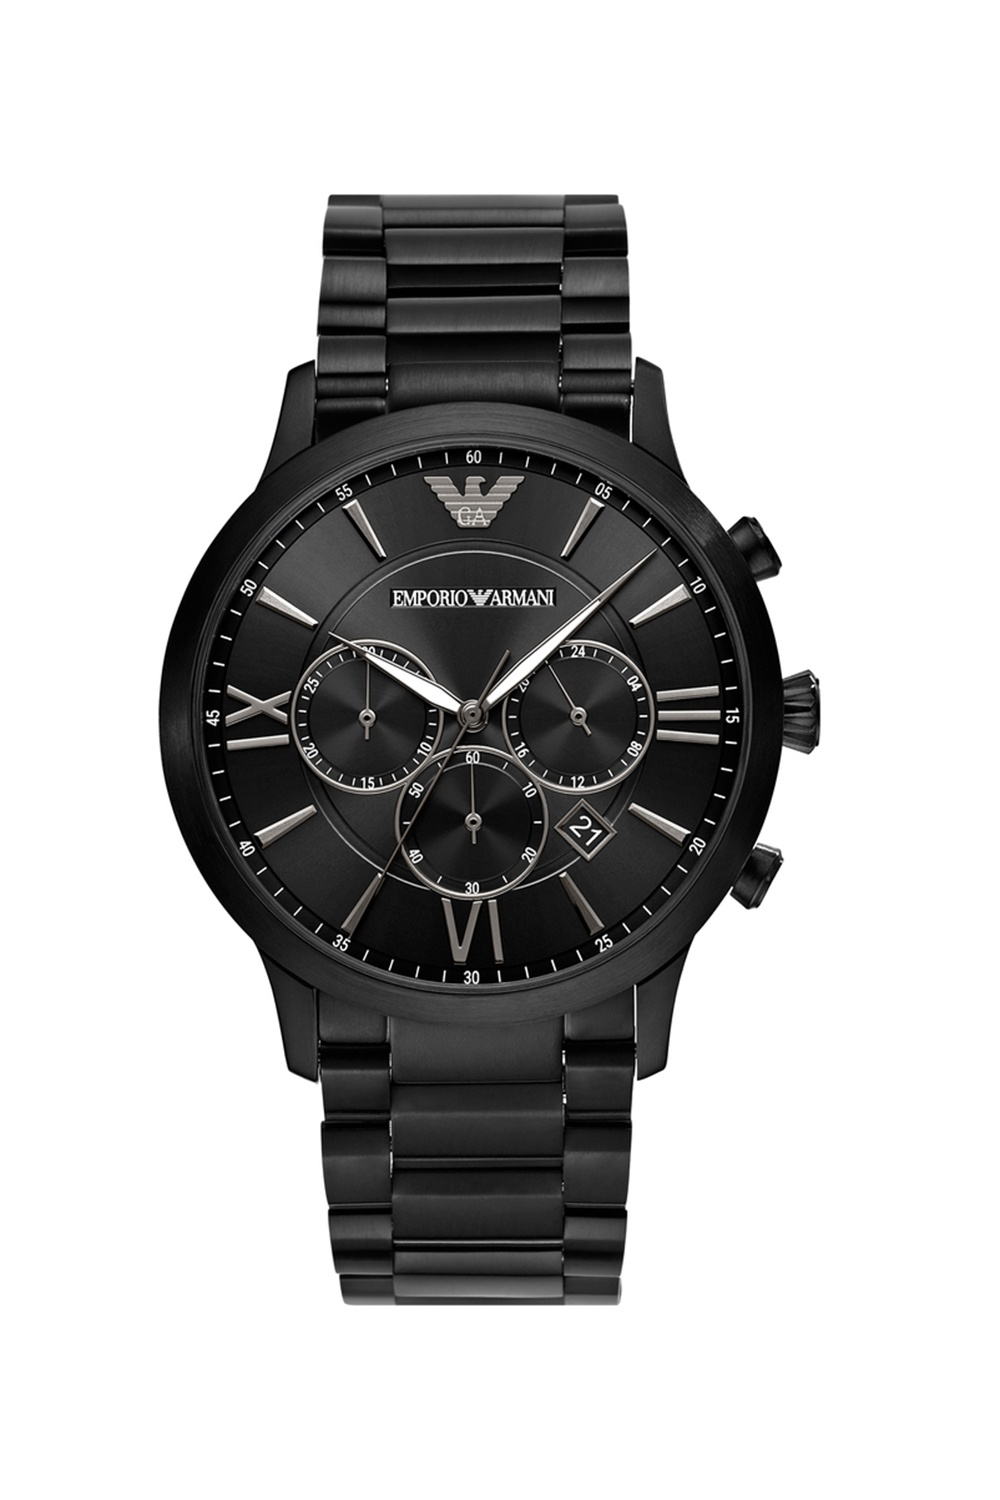 Emporio Armani Men's Giovanni Stainless Steel Watch | Odel.lk